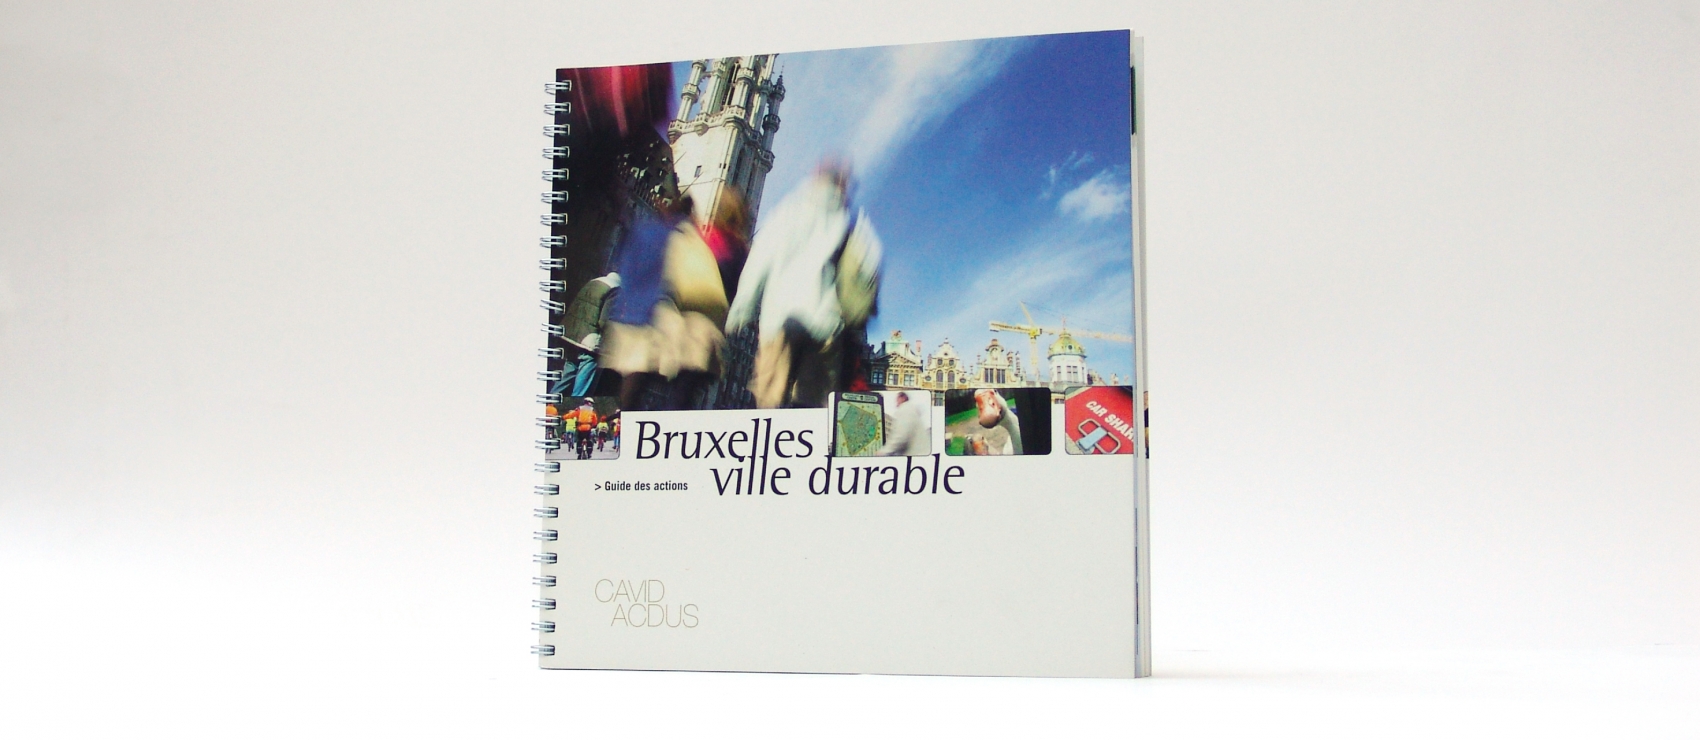 IBGE - Sustainable development brochure